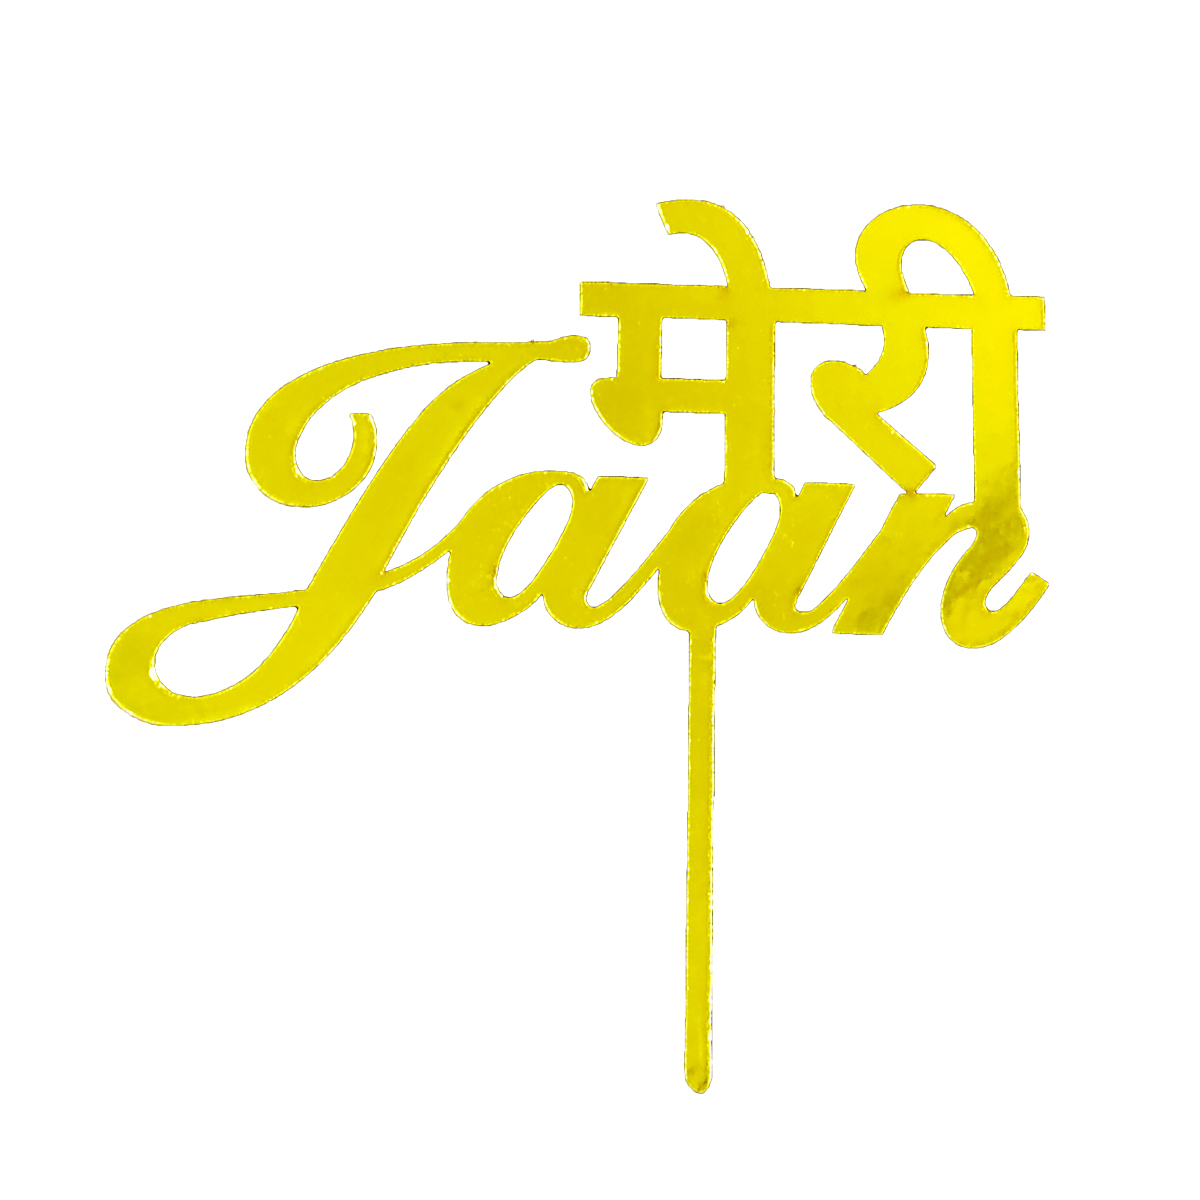 Bhiya purana logo pasand he ki New... - Indore Meri Jaan | Facebook